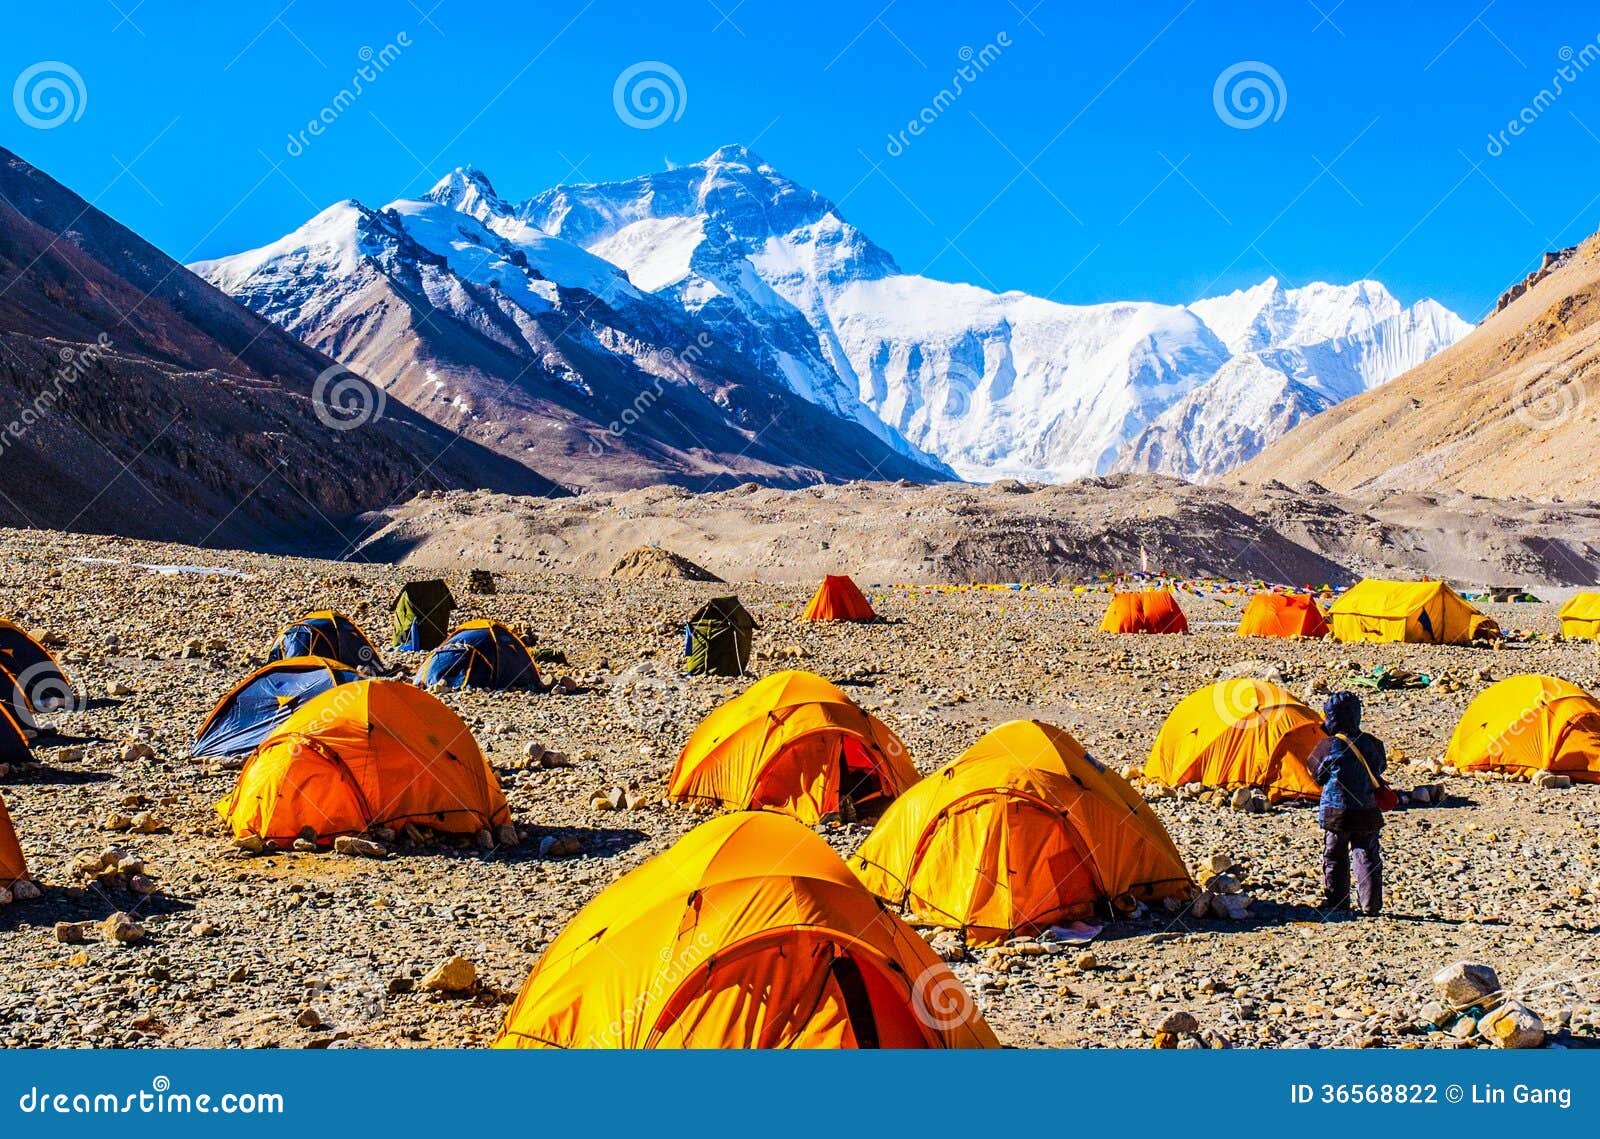 tibetan plateau scene-everest(mount qomolangma) base camp